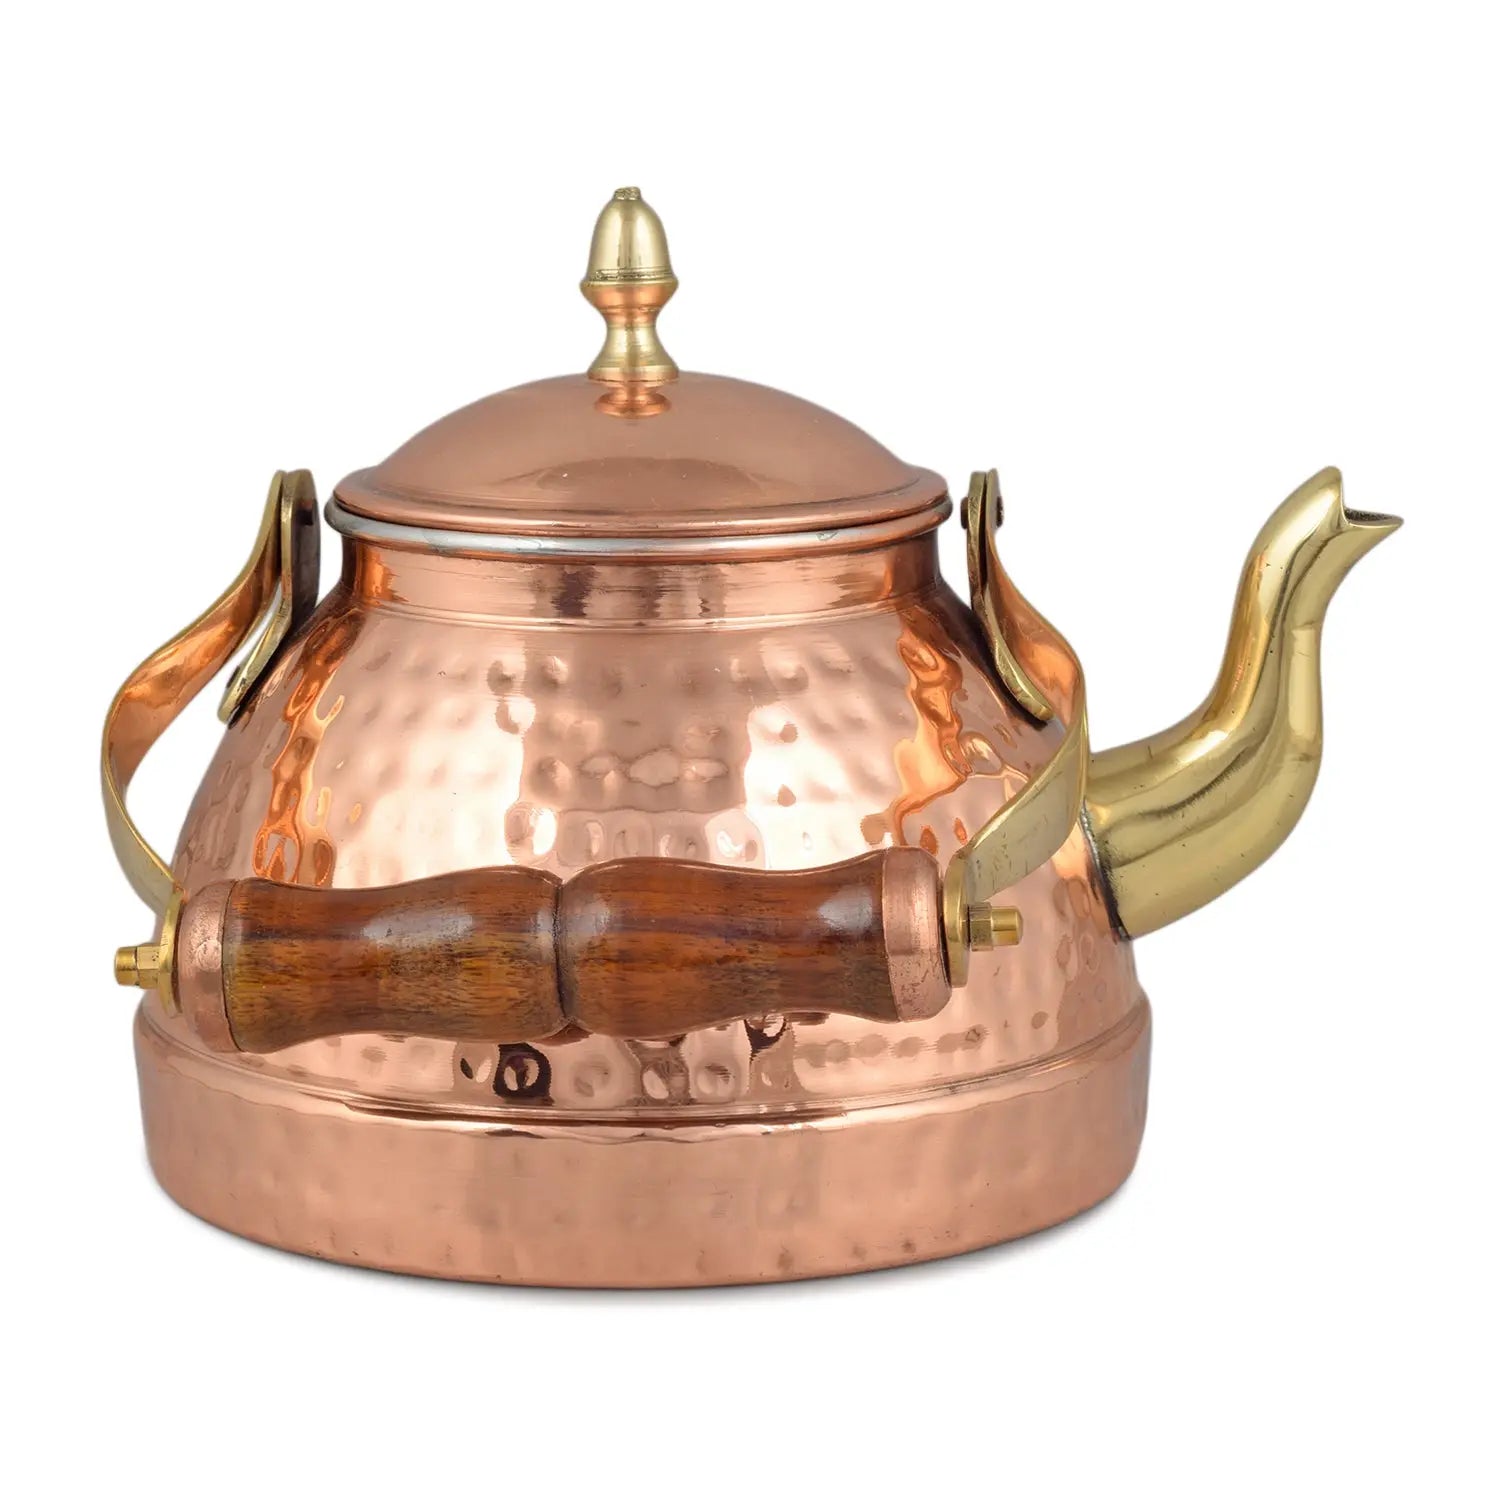 Copper tea set made in india